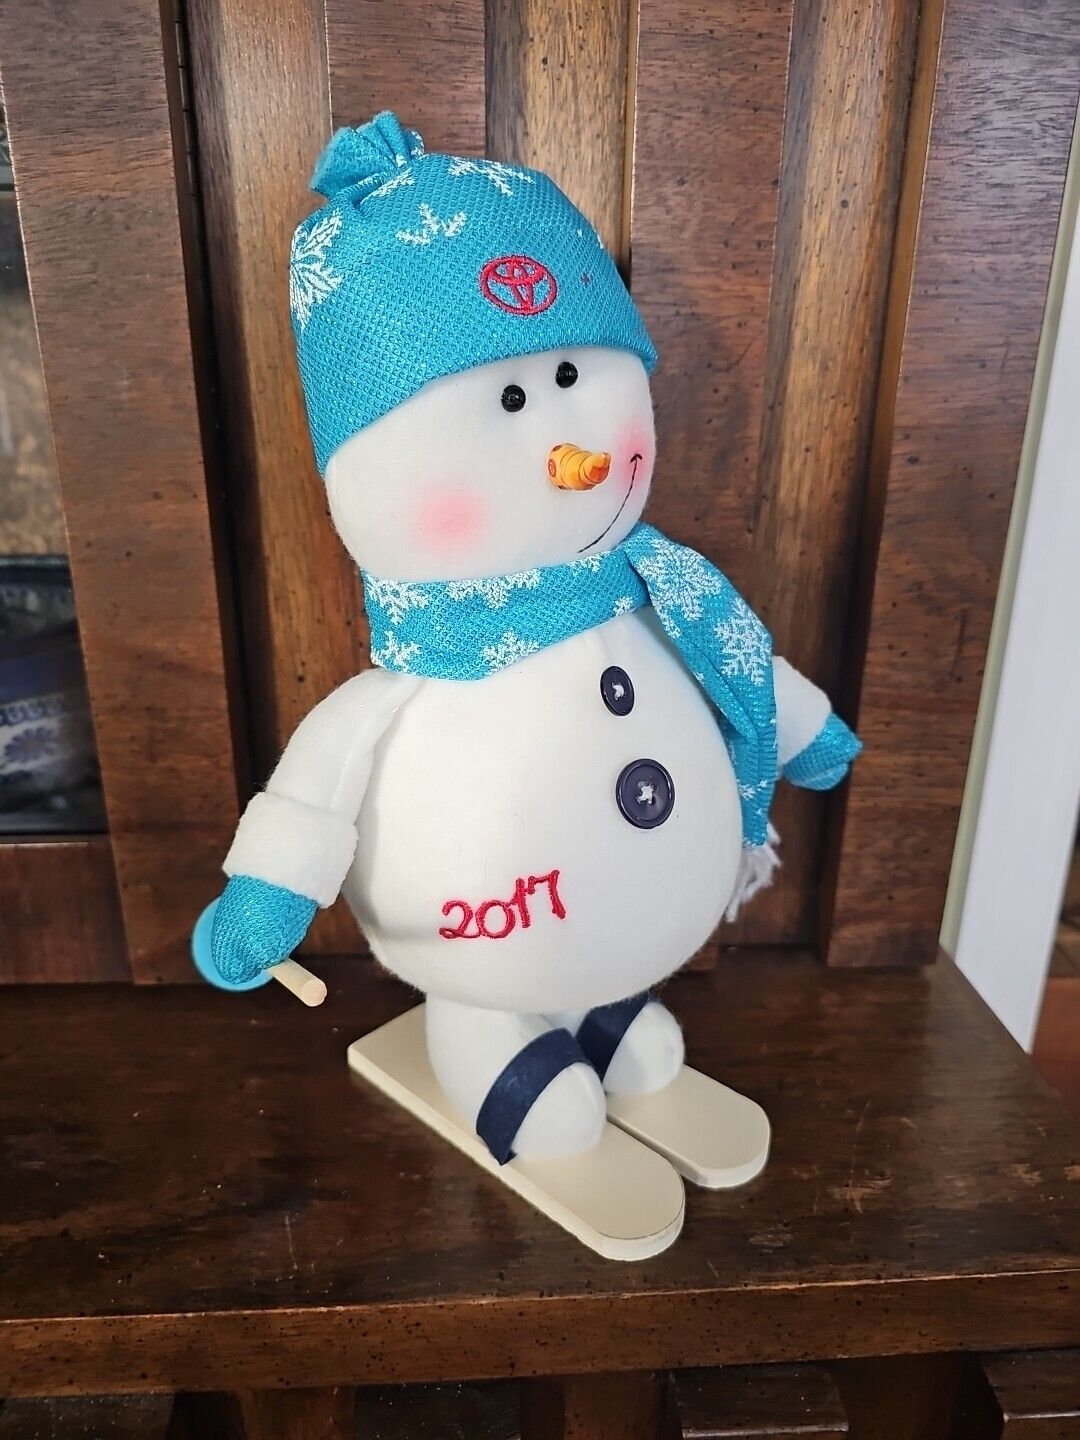 2017 Toyota Dealer Christmas Promotion..Skiing Snowman 